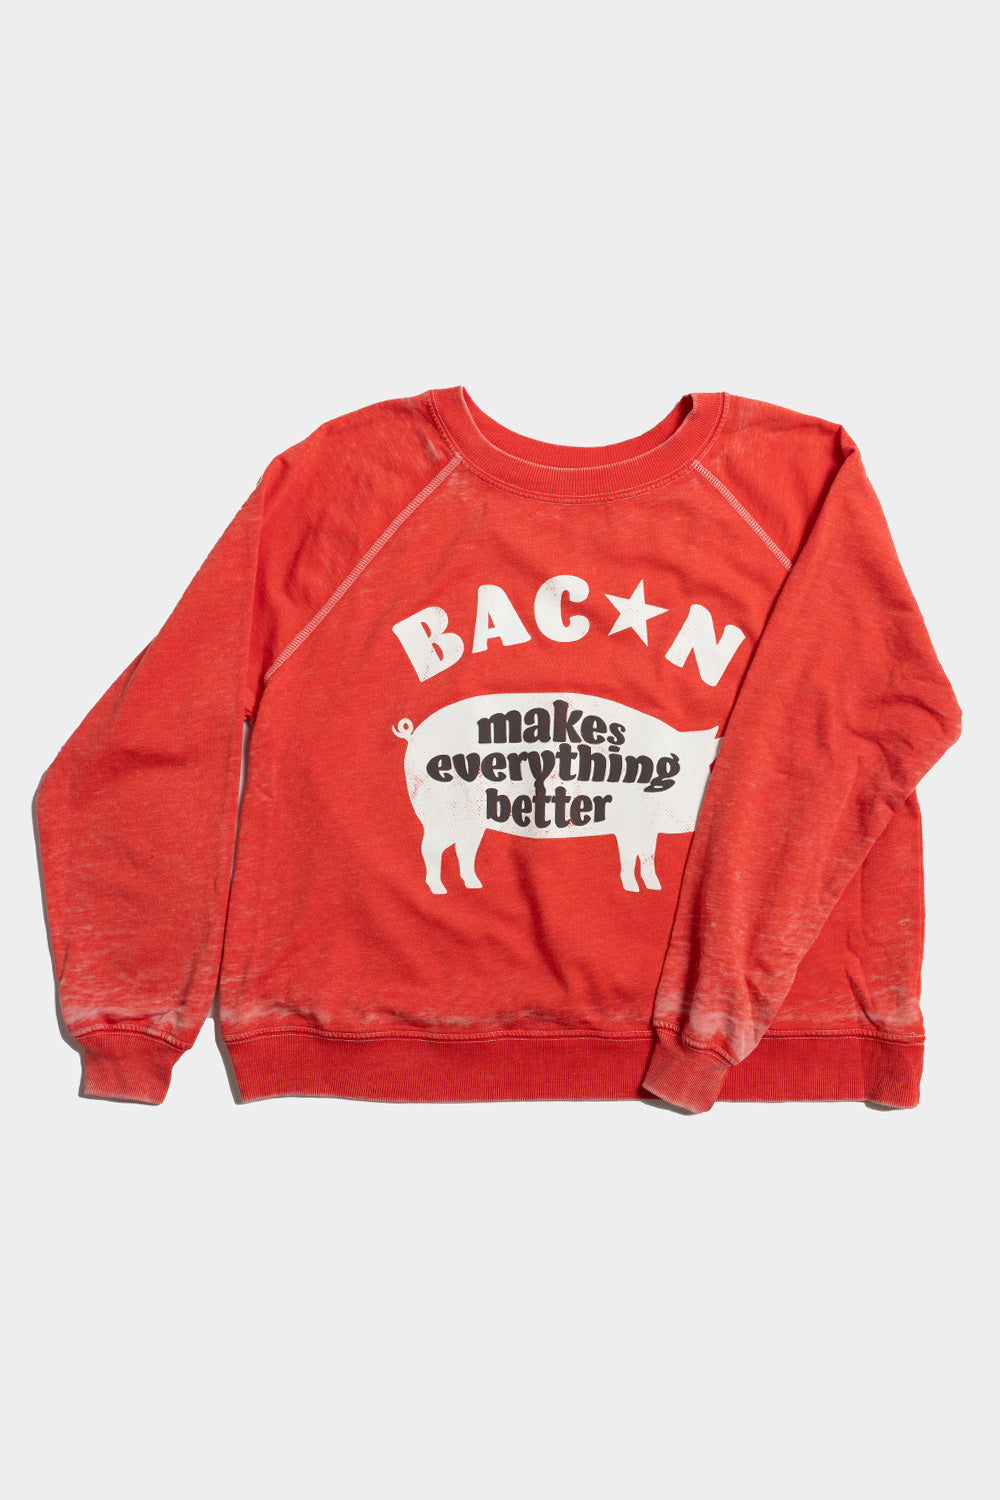 Bacon Makes Everything Better Sweatshirt